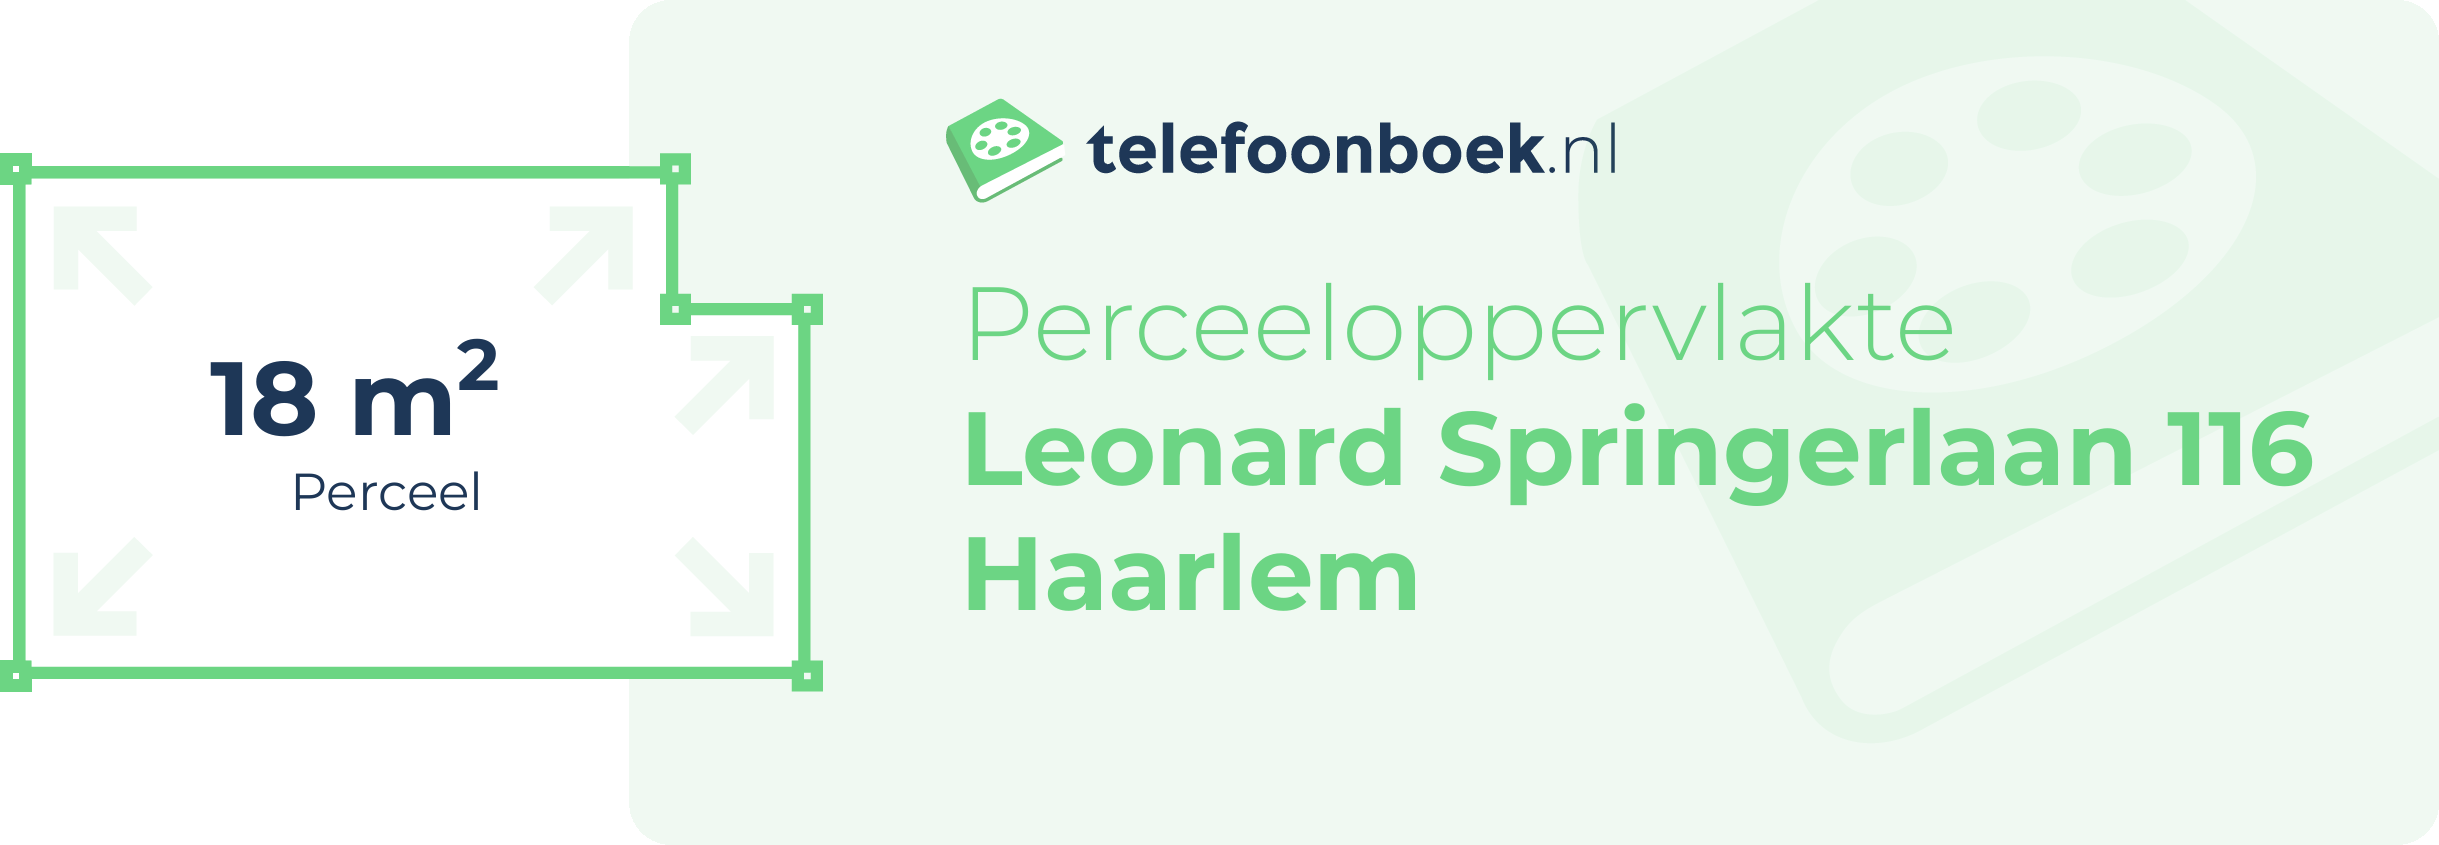 Perceeloppervlakte Leonard Springerlaan 116 Haarlem